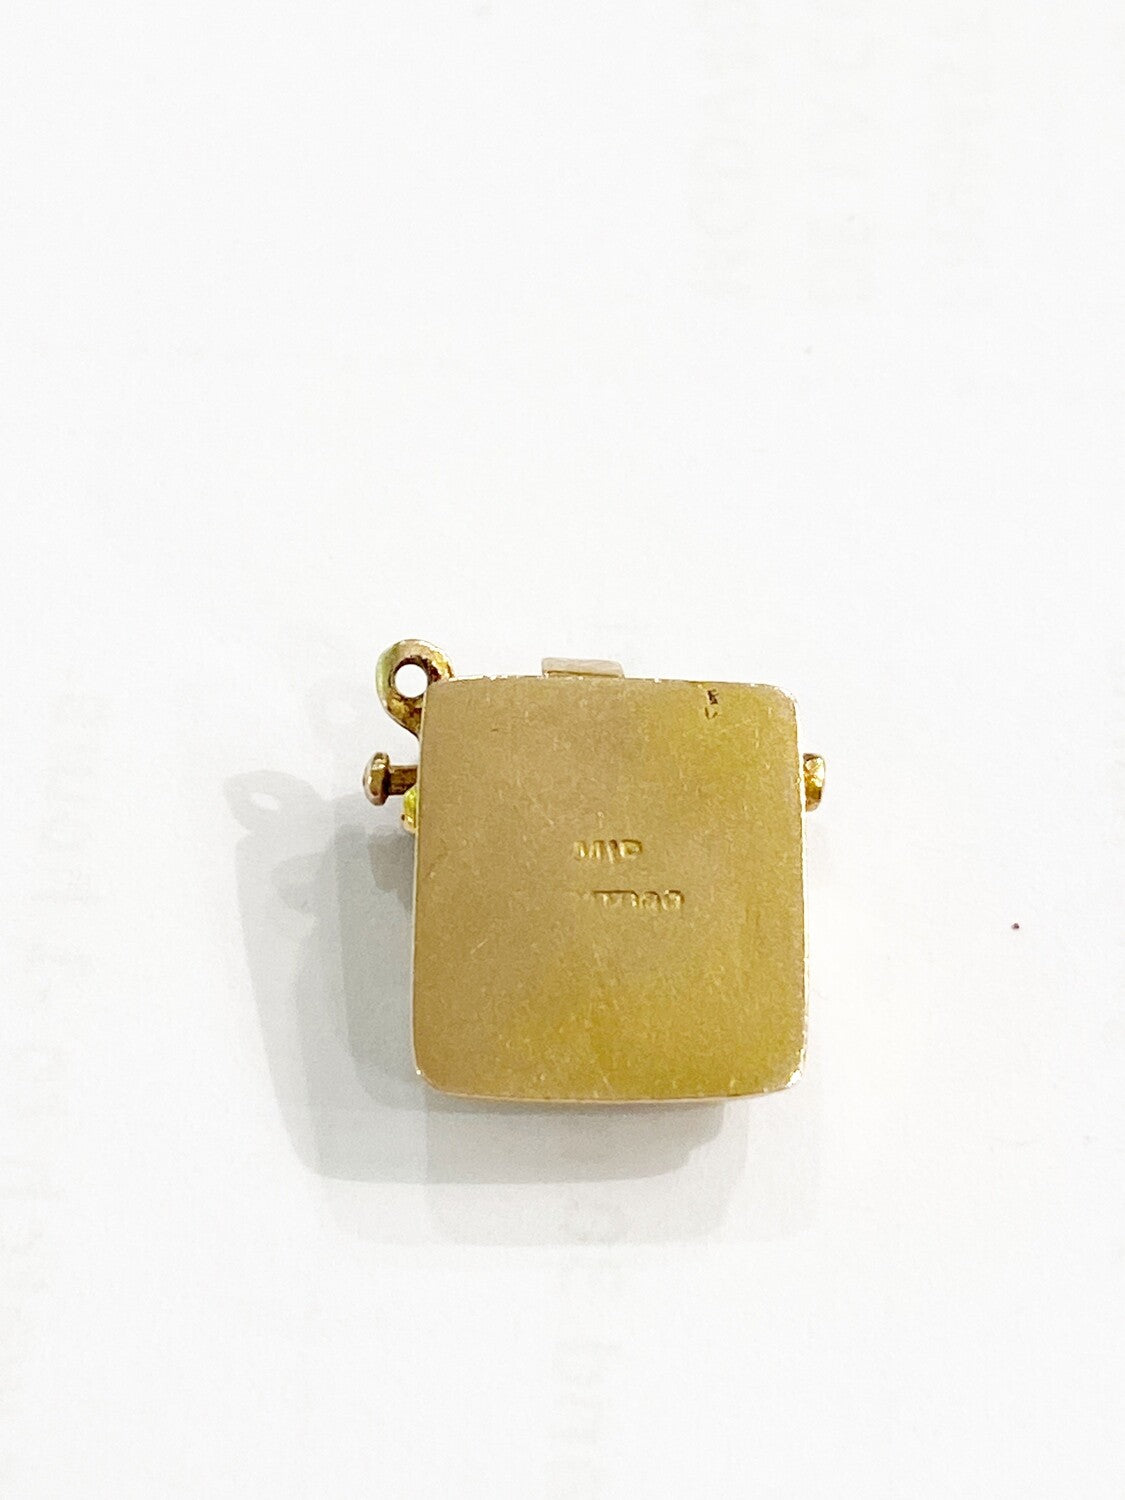 9ct 375 vintage gold type writer charm circa 1959